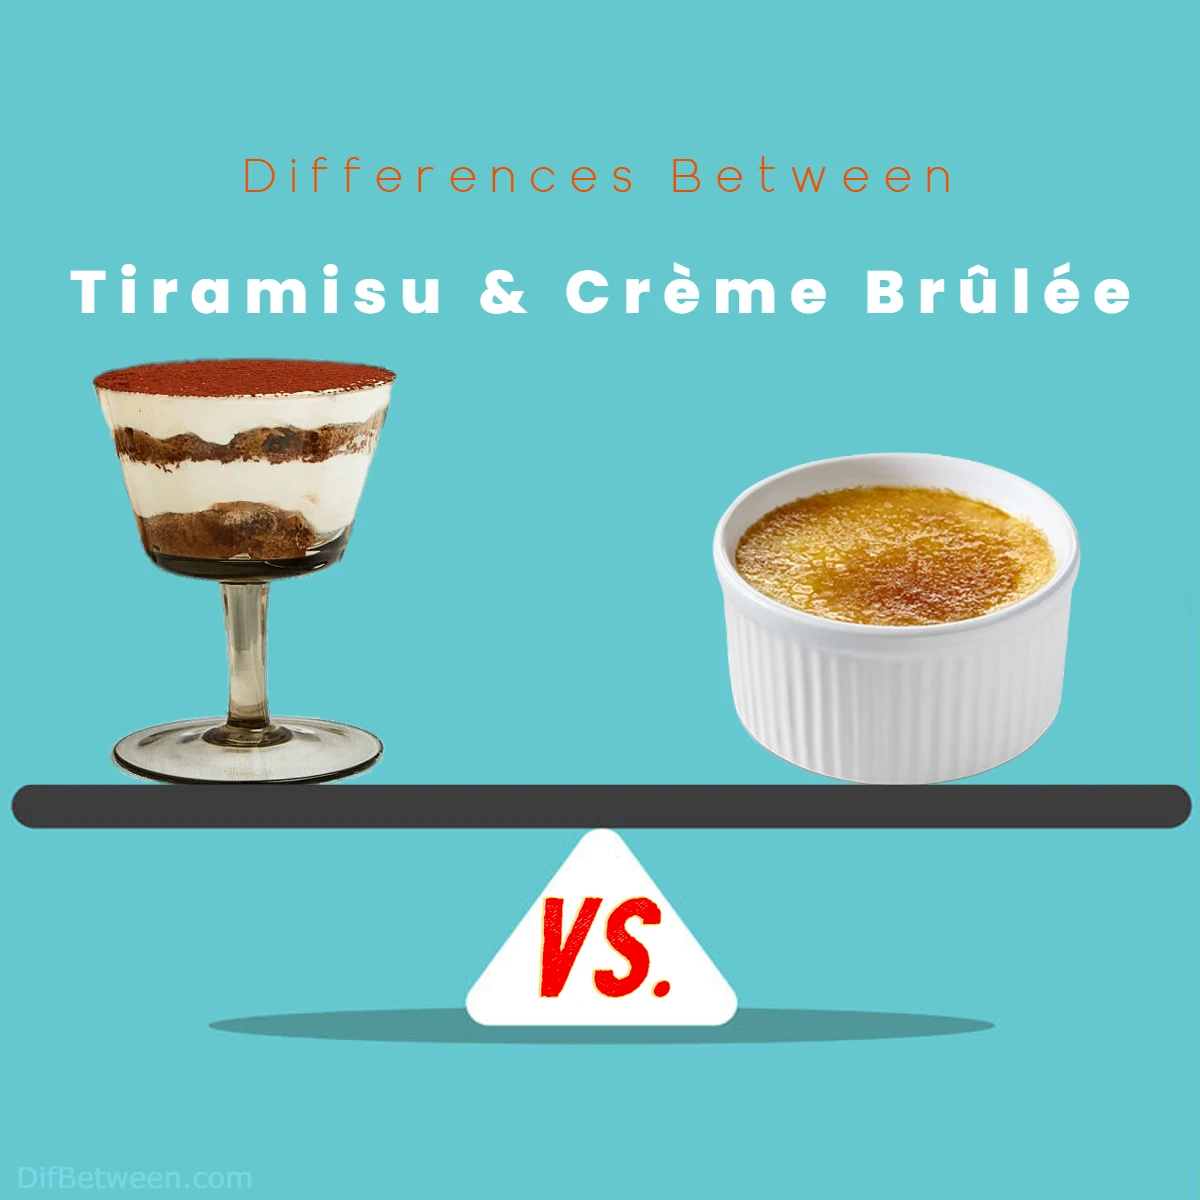 Differences Between Creme Brulee and Tiramisu